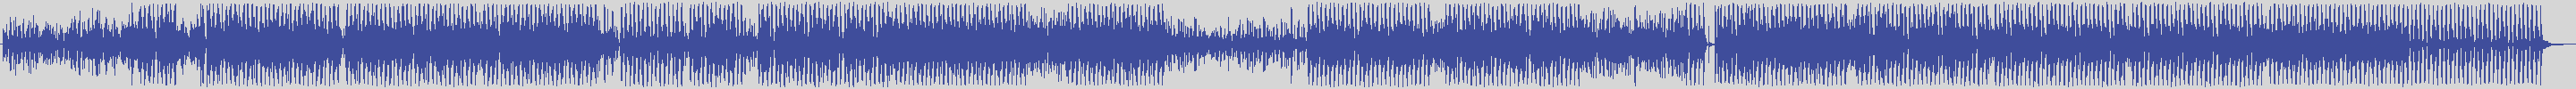 nf_boyz_records [NFY042] System 32 - En Silencio Ser [Original Mix] audio wave form